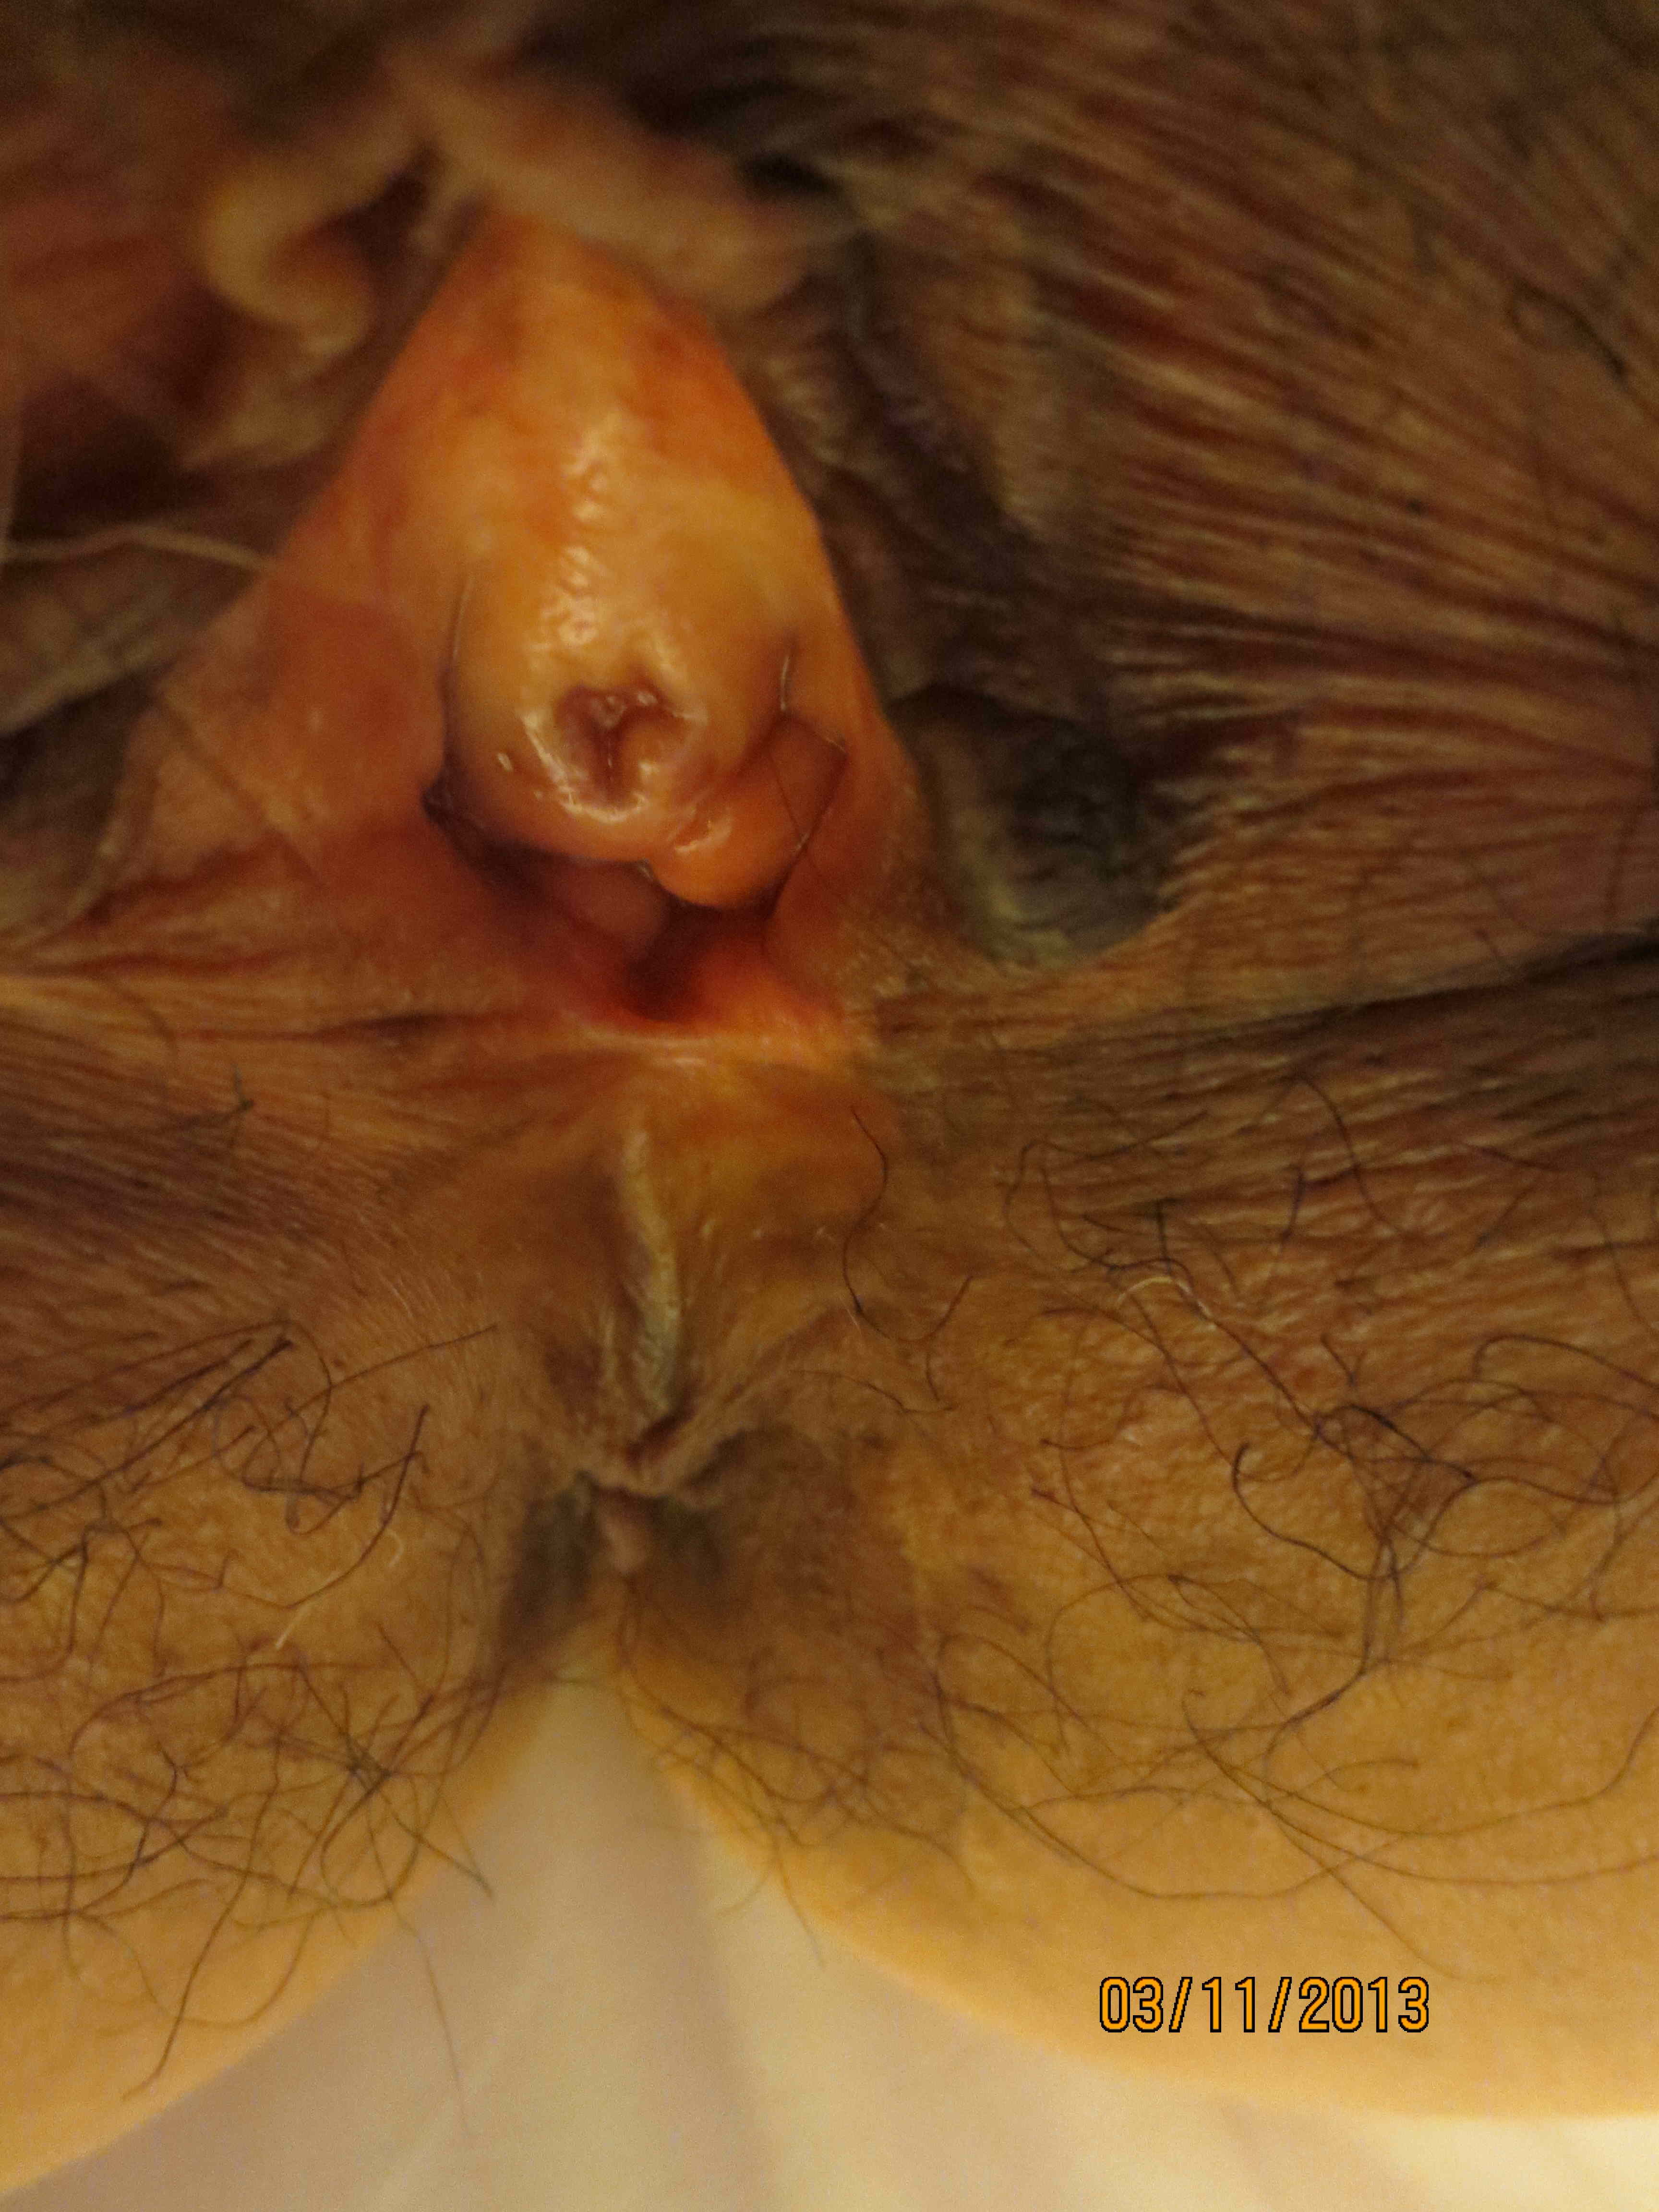 fleshlight filled pussy close up on yuvutu homemade amateur porn 1